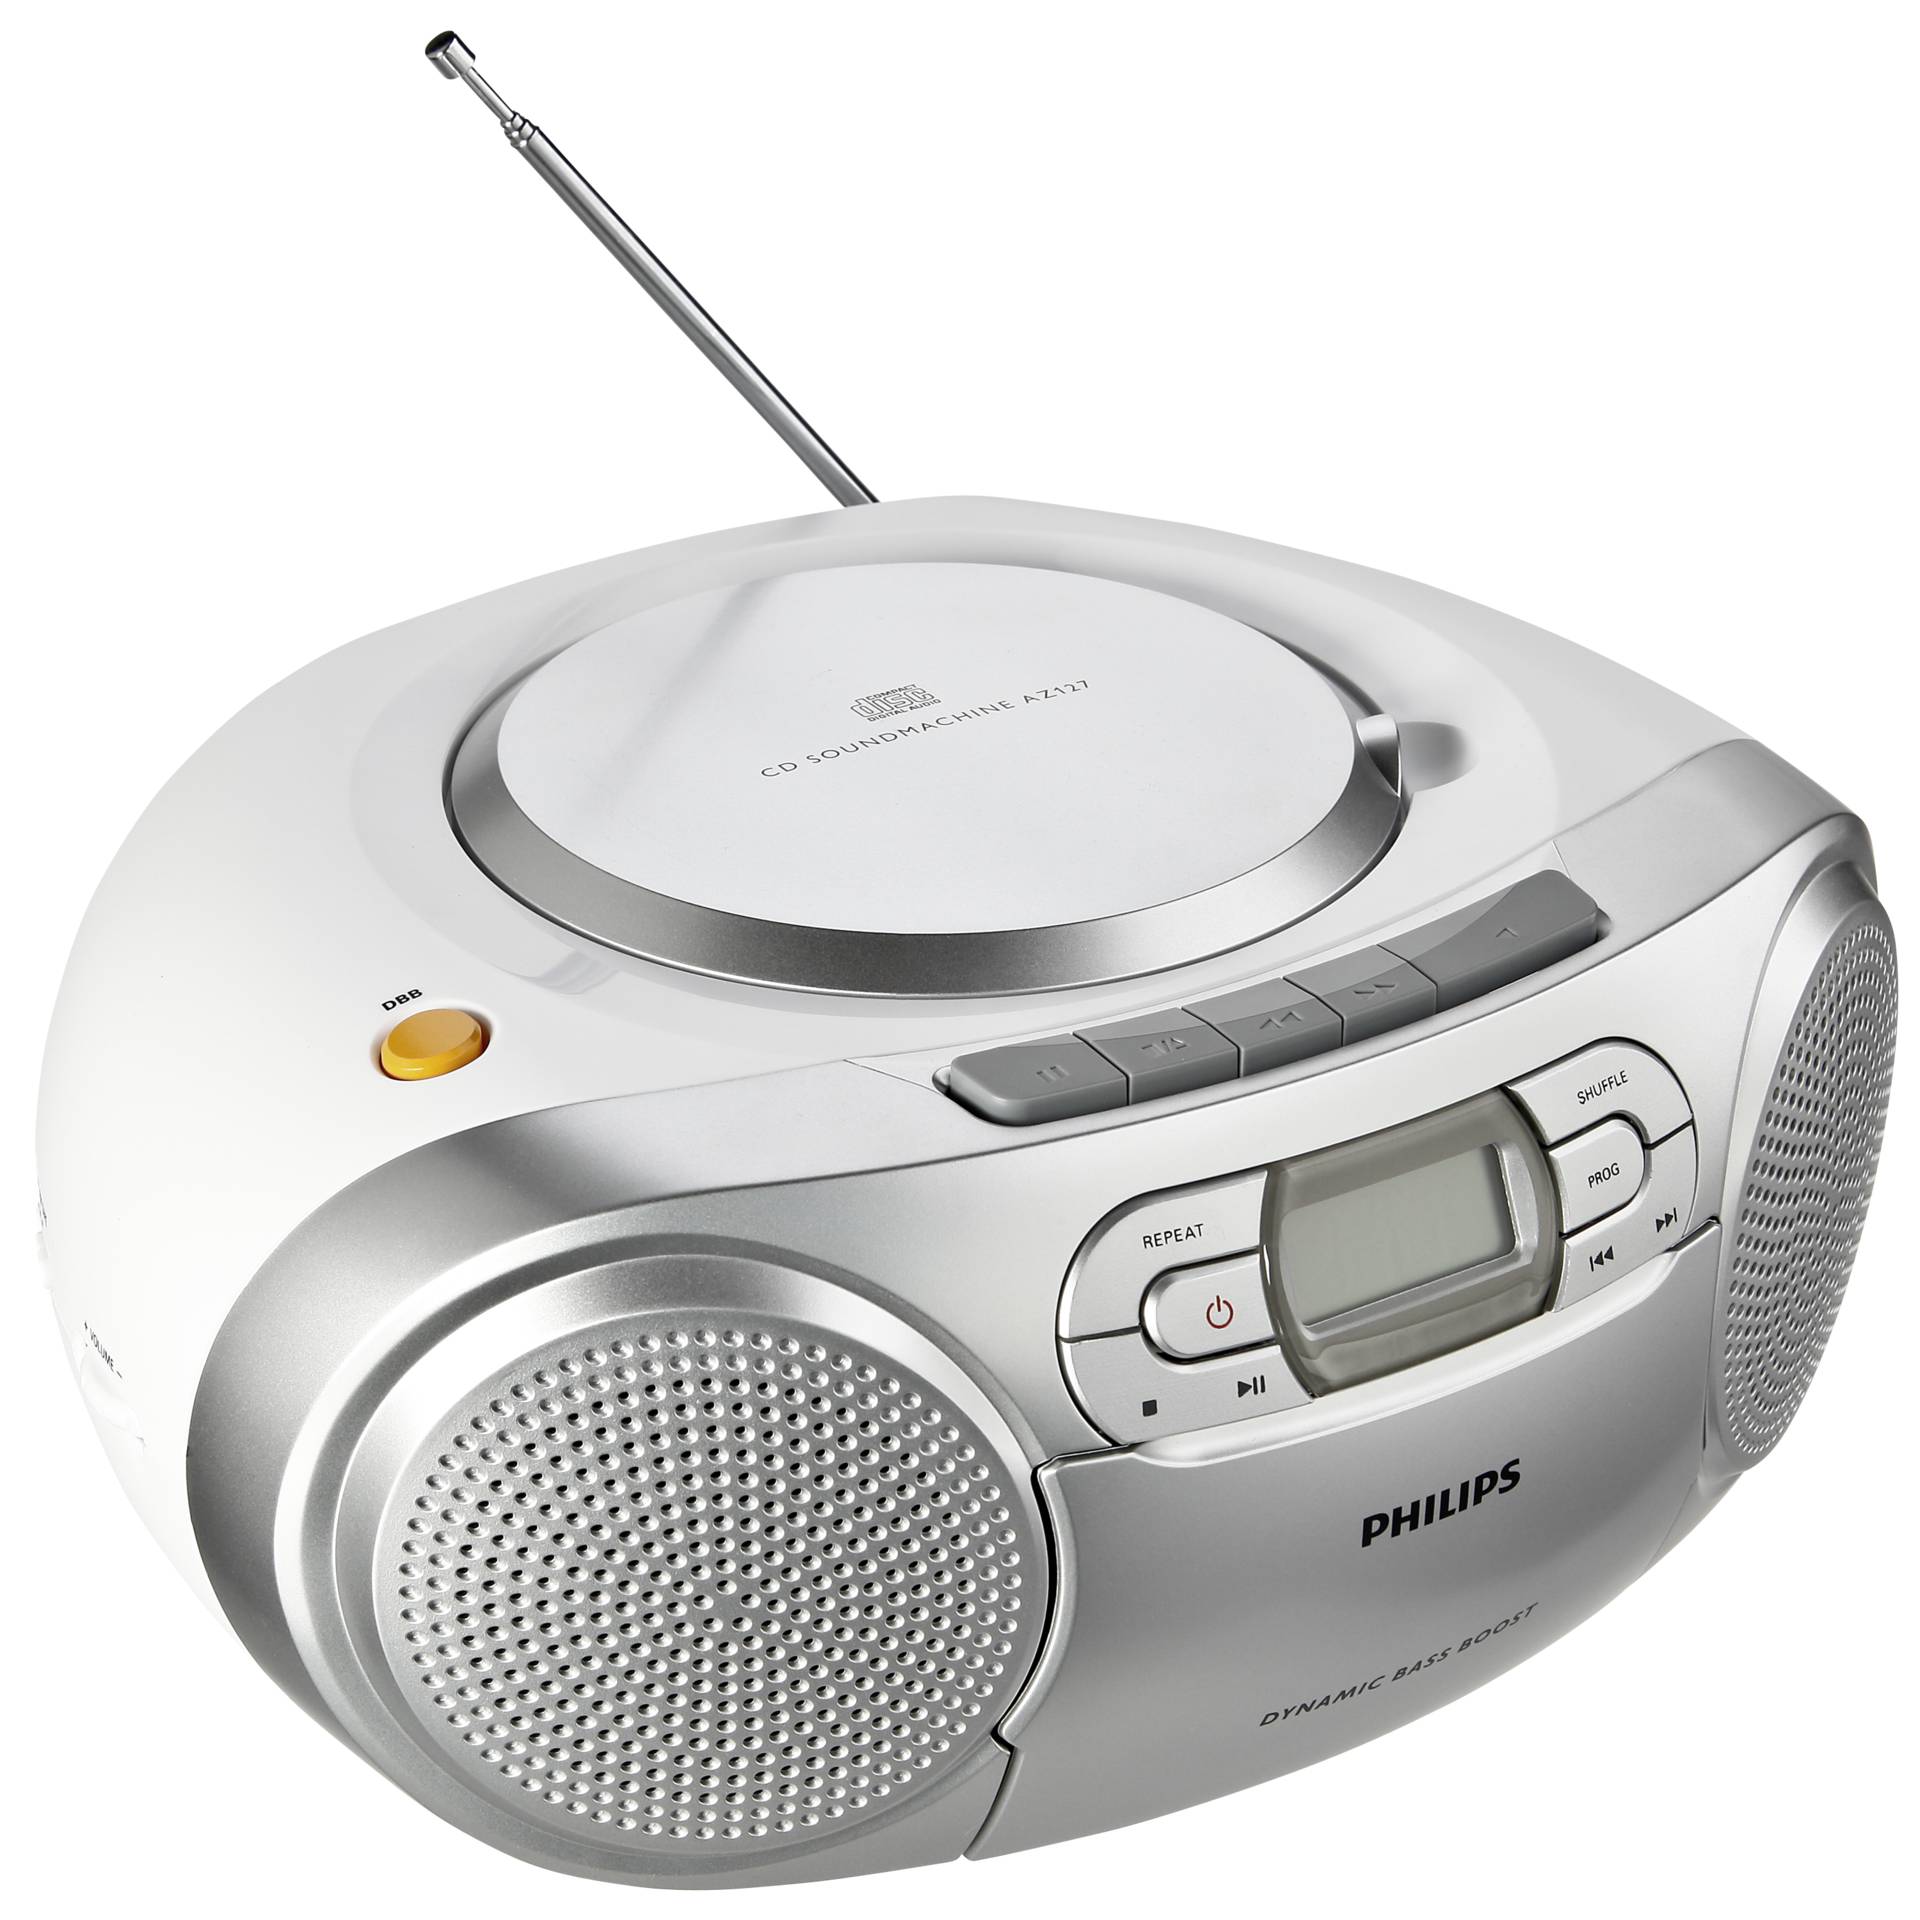 Philips AZ127 Radio mit CD-Player, CD-Audio, CD-R/RW, Kassette, UKW, 2x 1W RMS